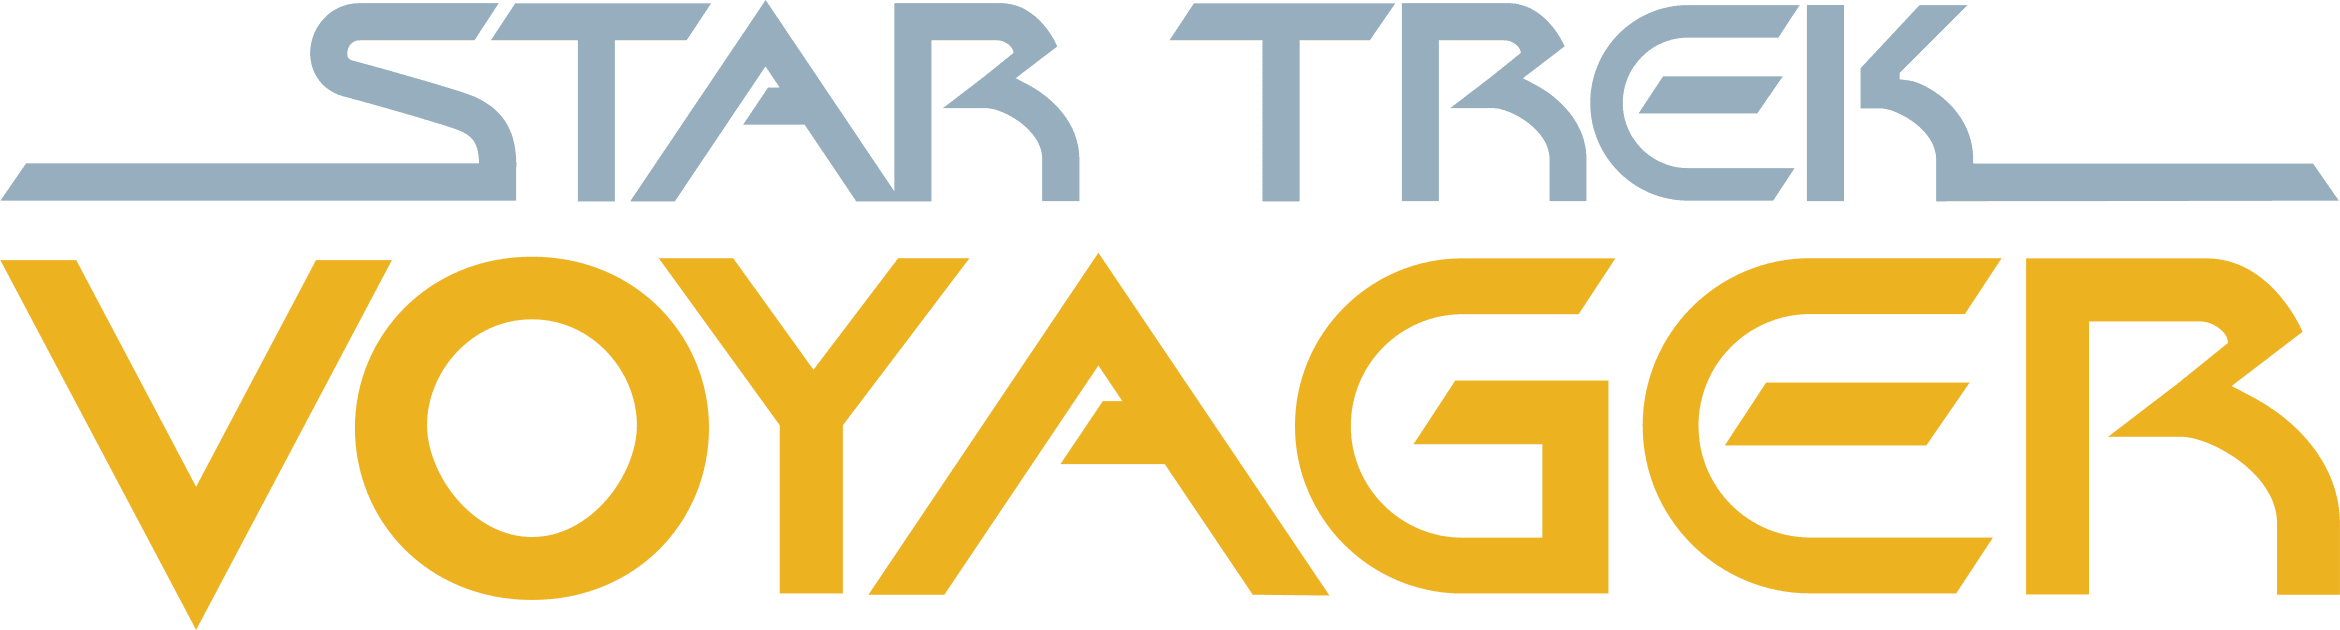 Star Trek: Voyager logo